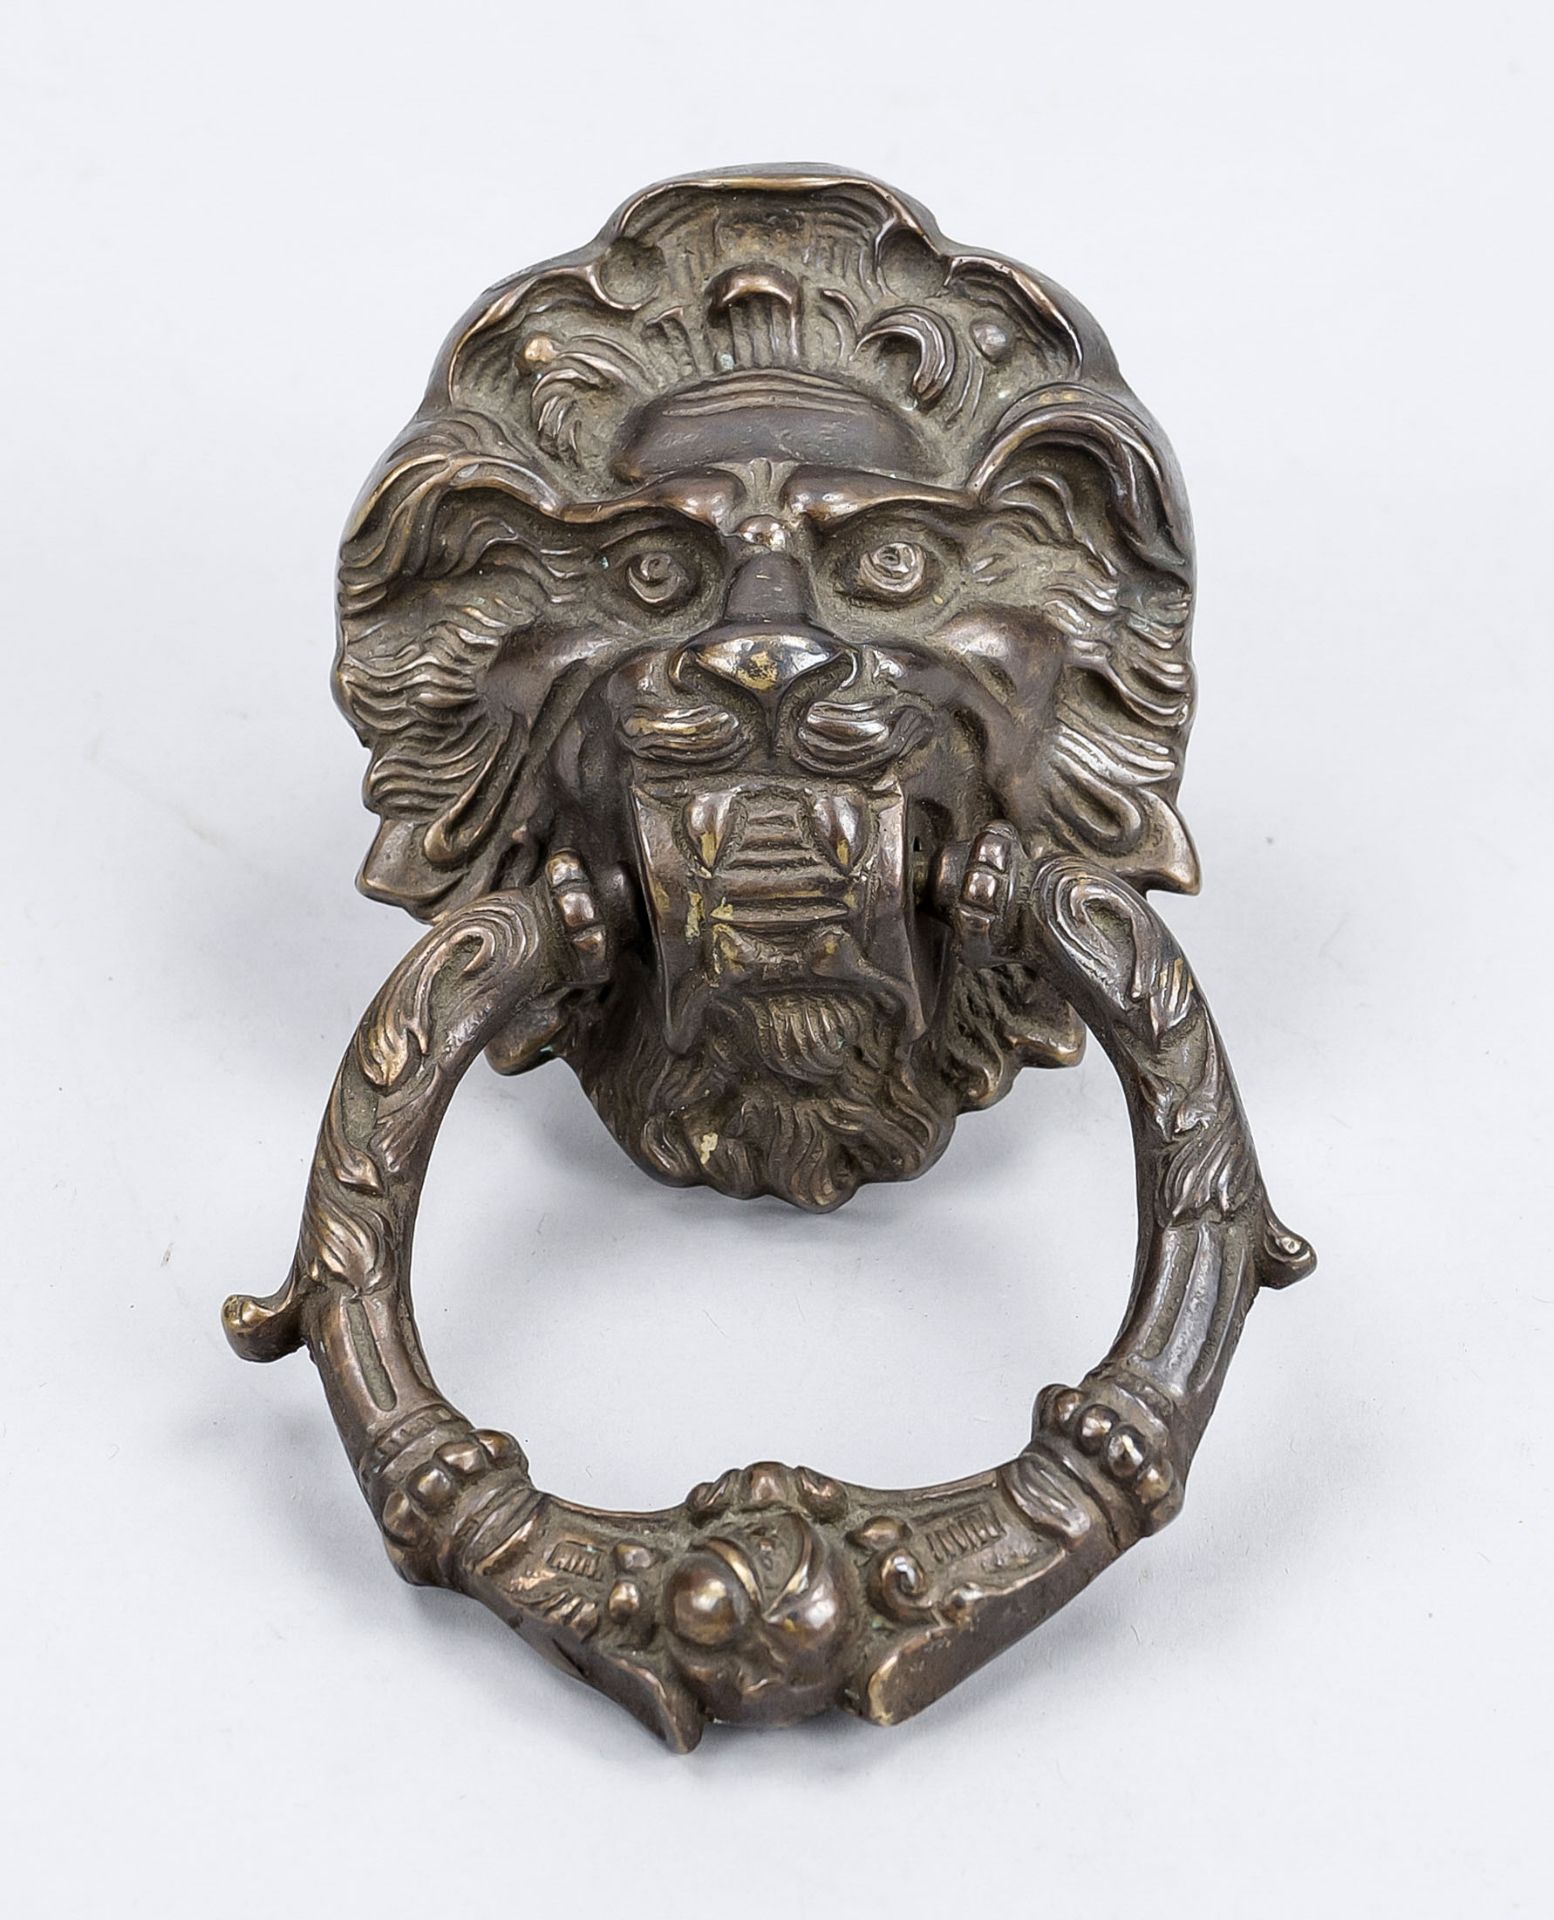 Wilhelminian-style door knocker, c. 1880, lion's head with ring, bronze, two long fixing screws on